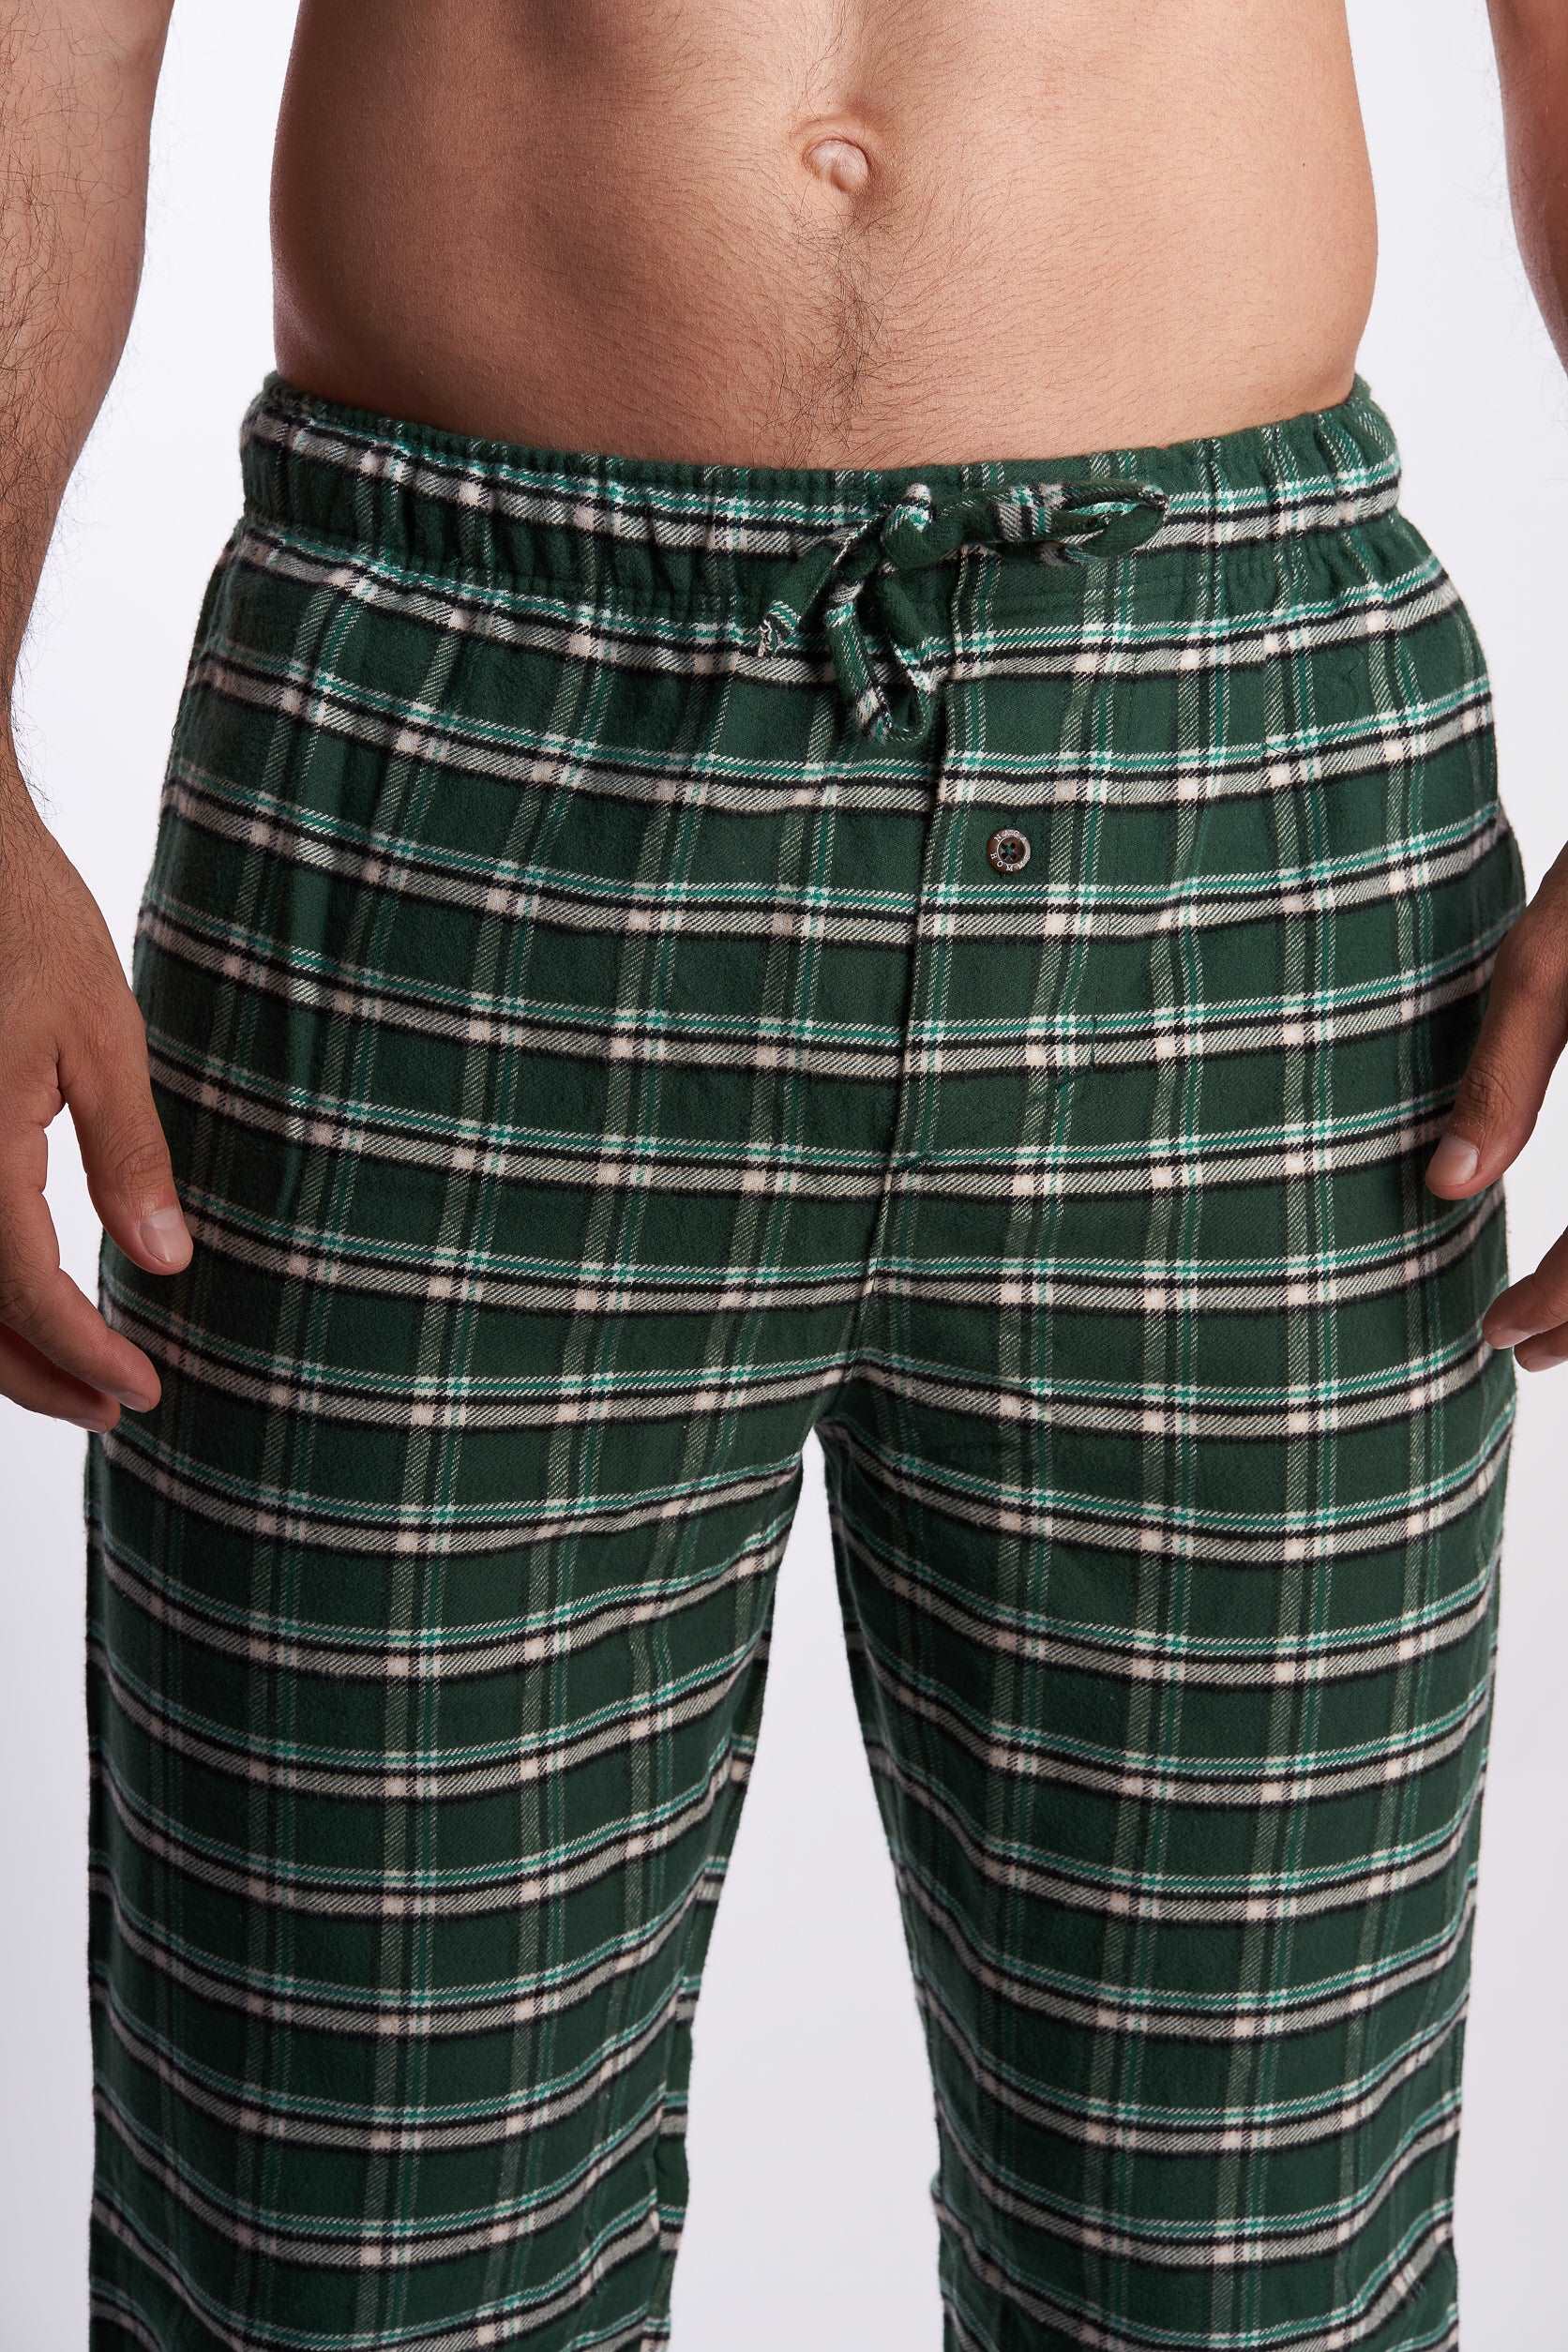 Green 2-piece men's pajama(mpjl114)